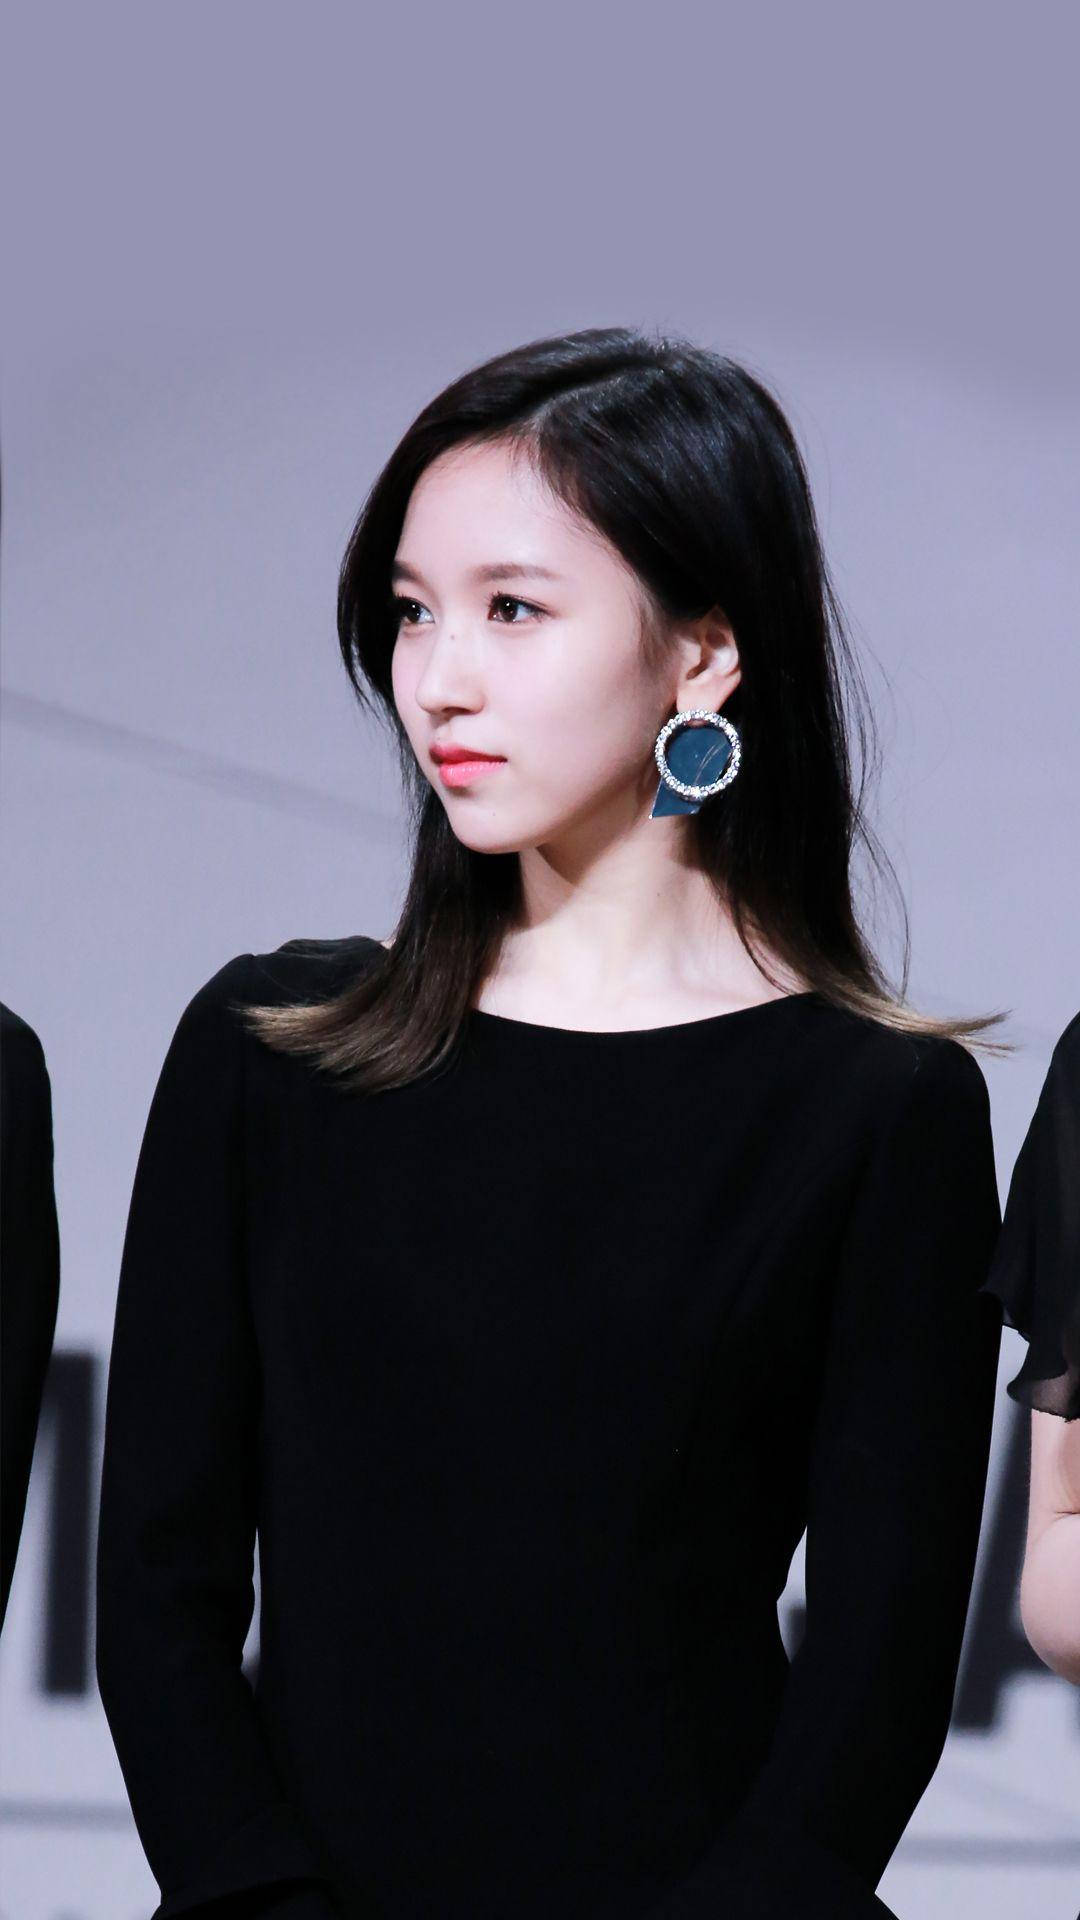 Twice Member Mina In Black Dress Wallpaper